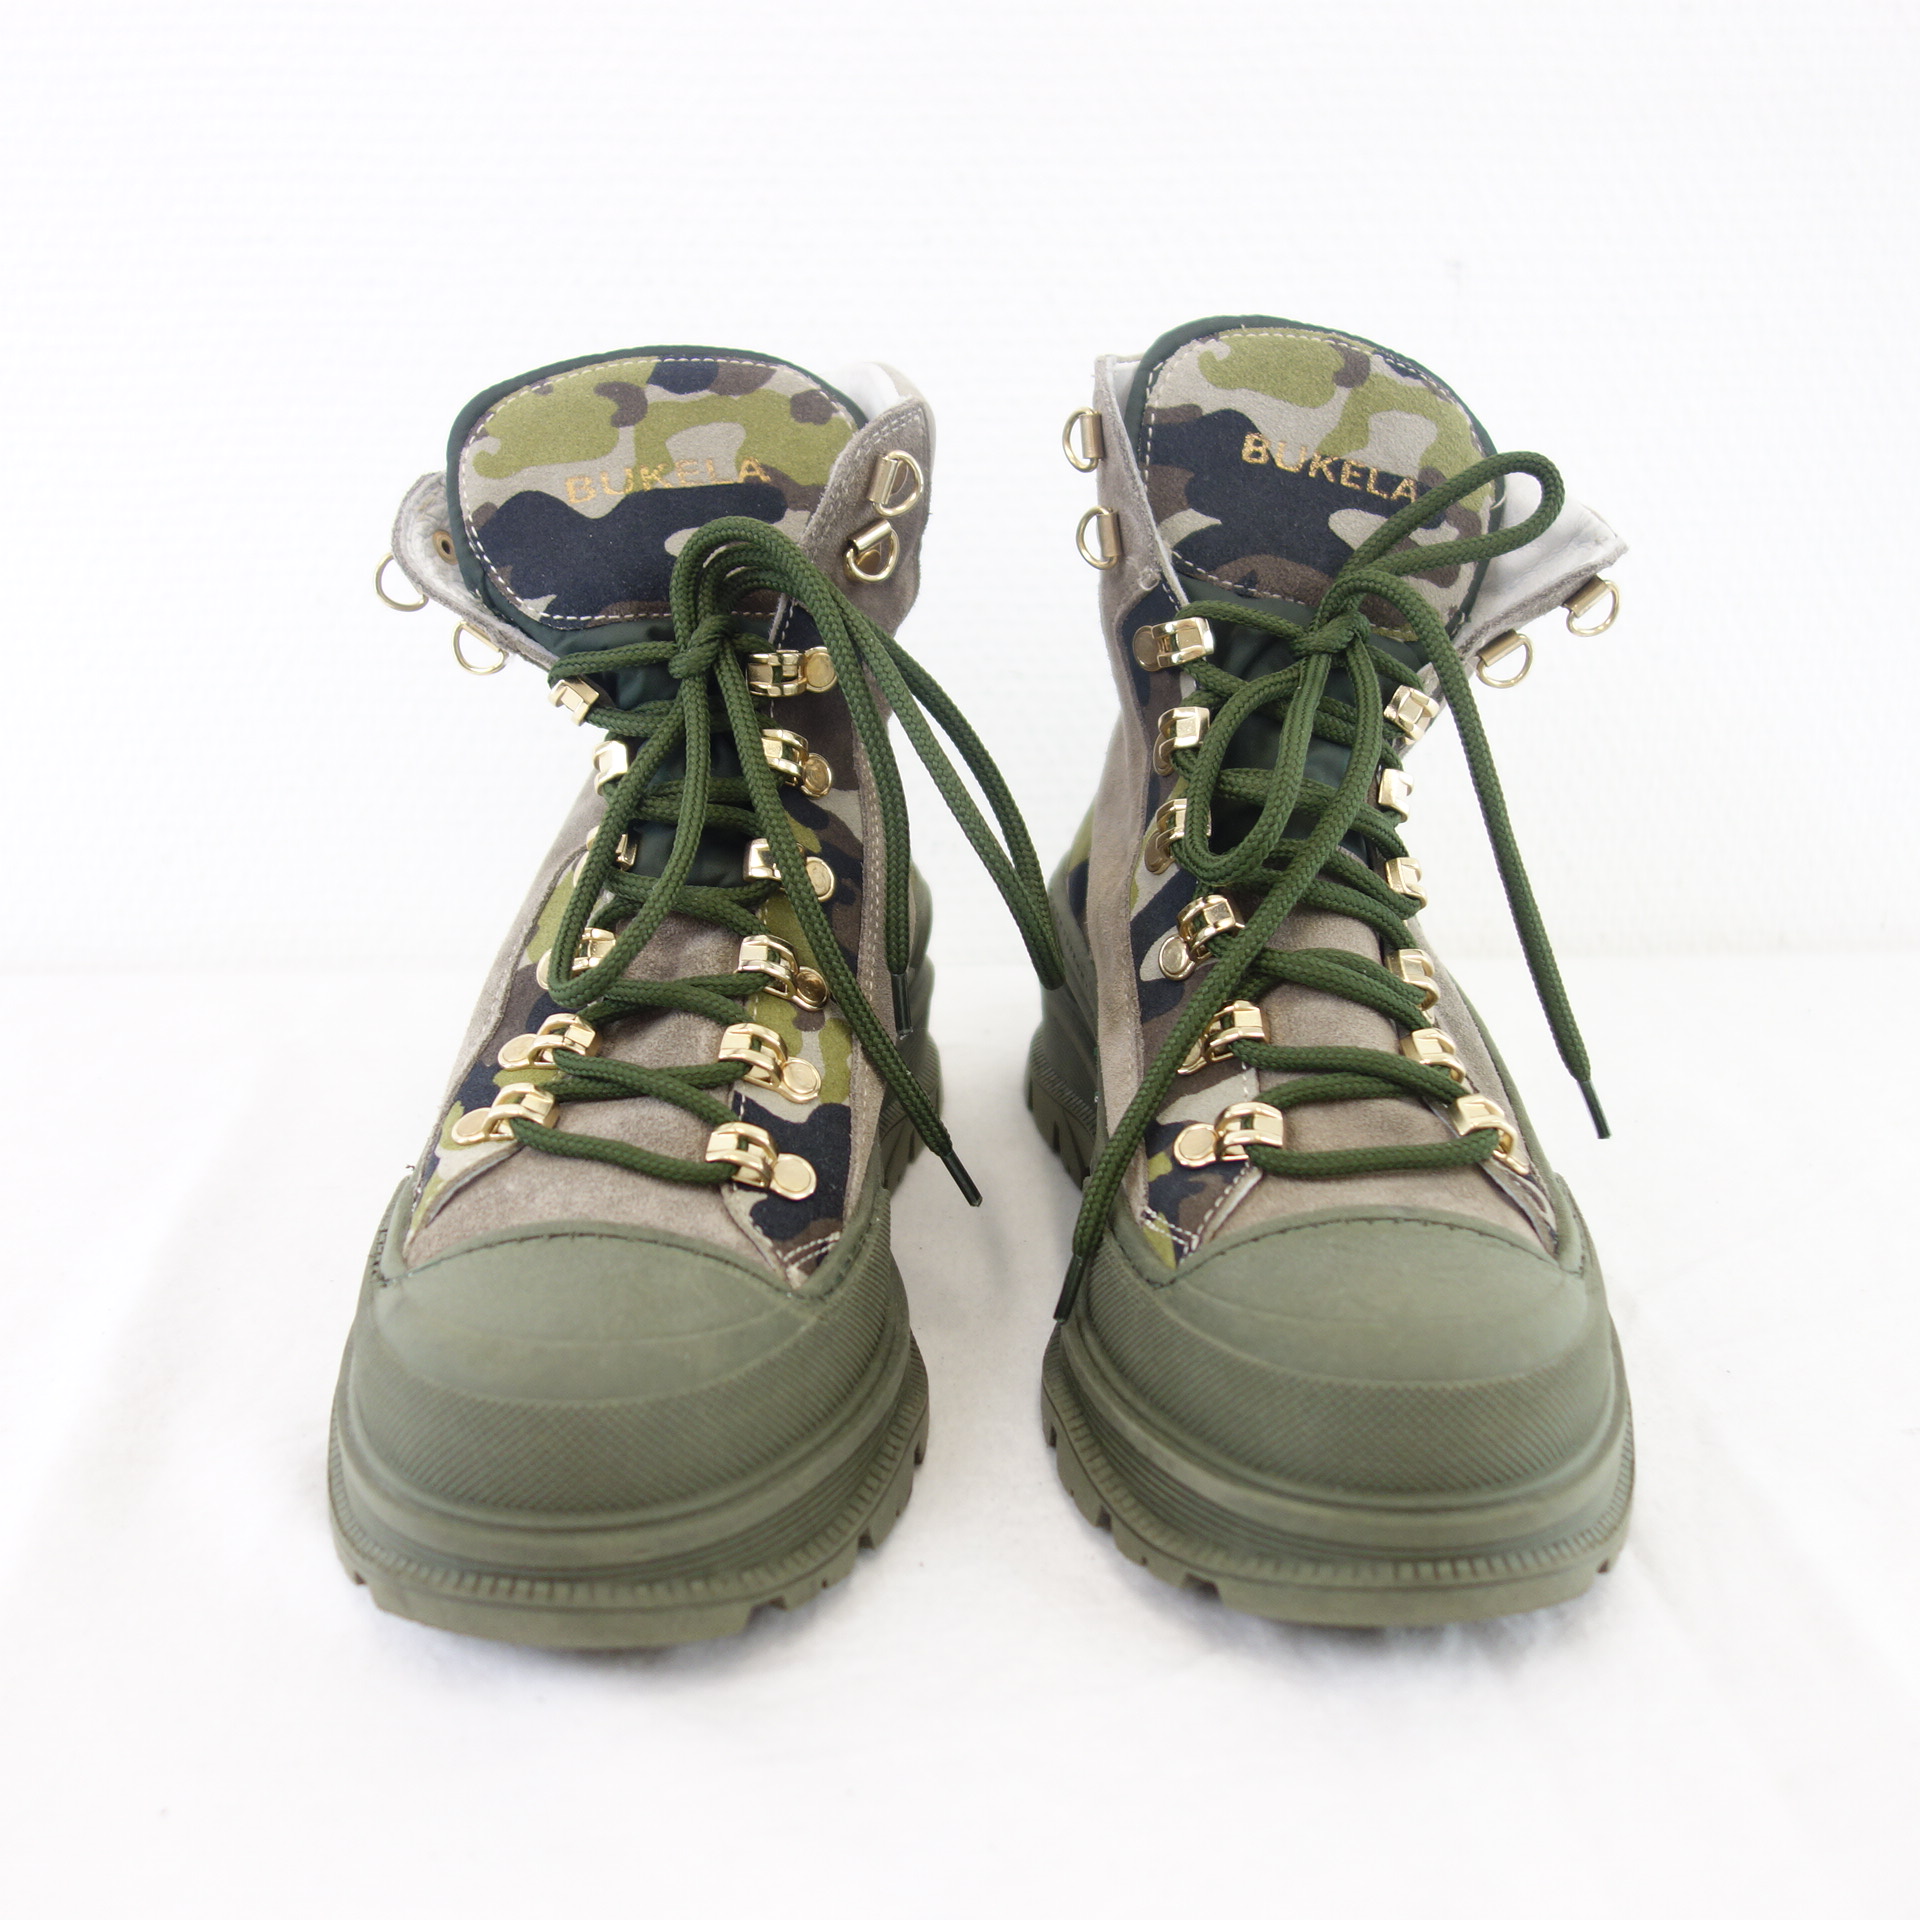 BUKELA Damen Schuhe Halbschuhe Boots Stiefeletten Leder Camouflage Khaki Schnürer Gr 37